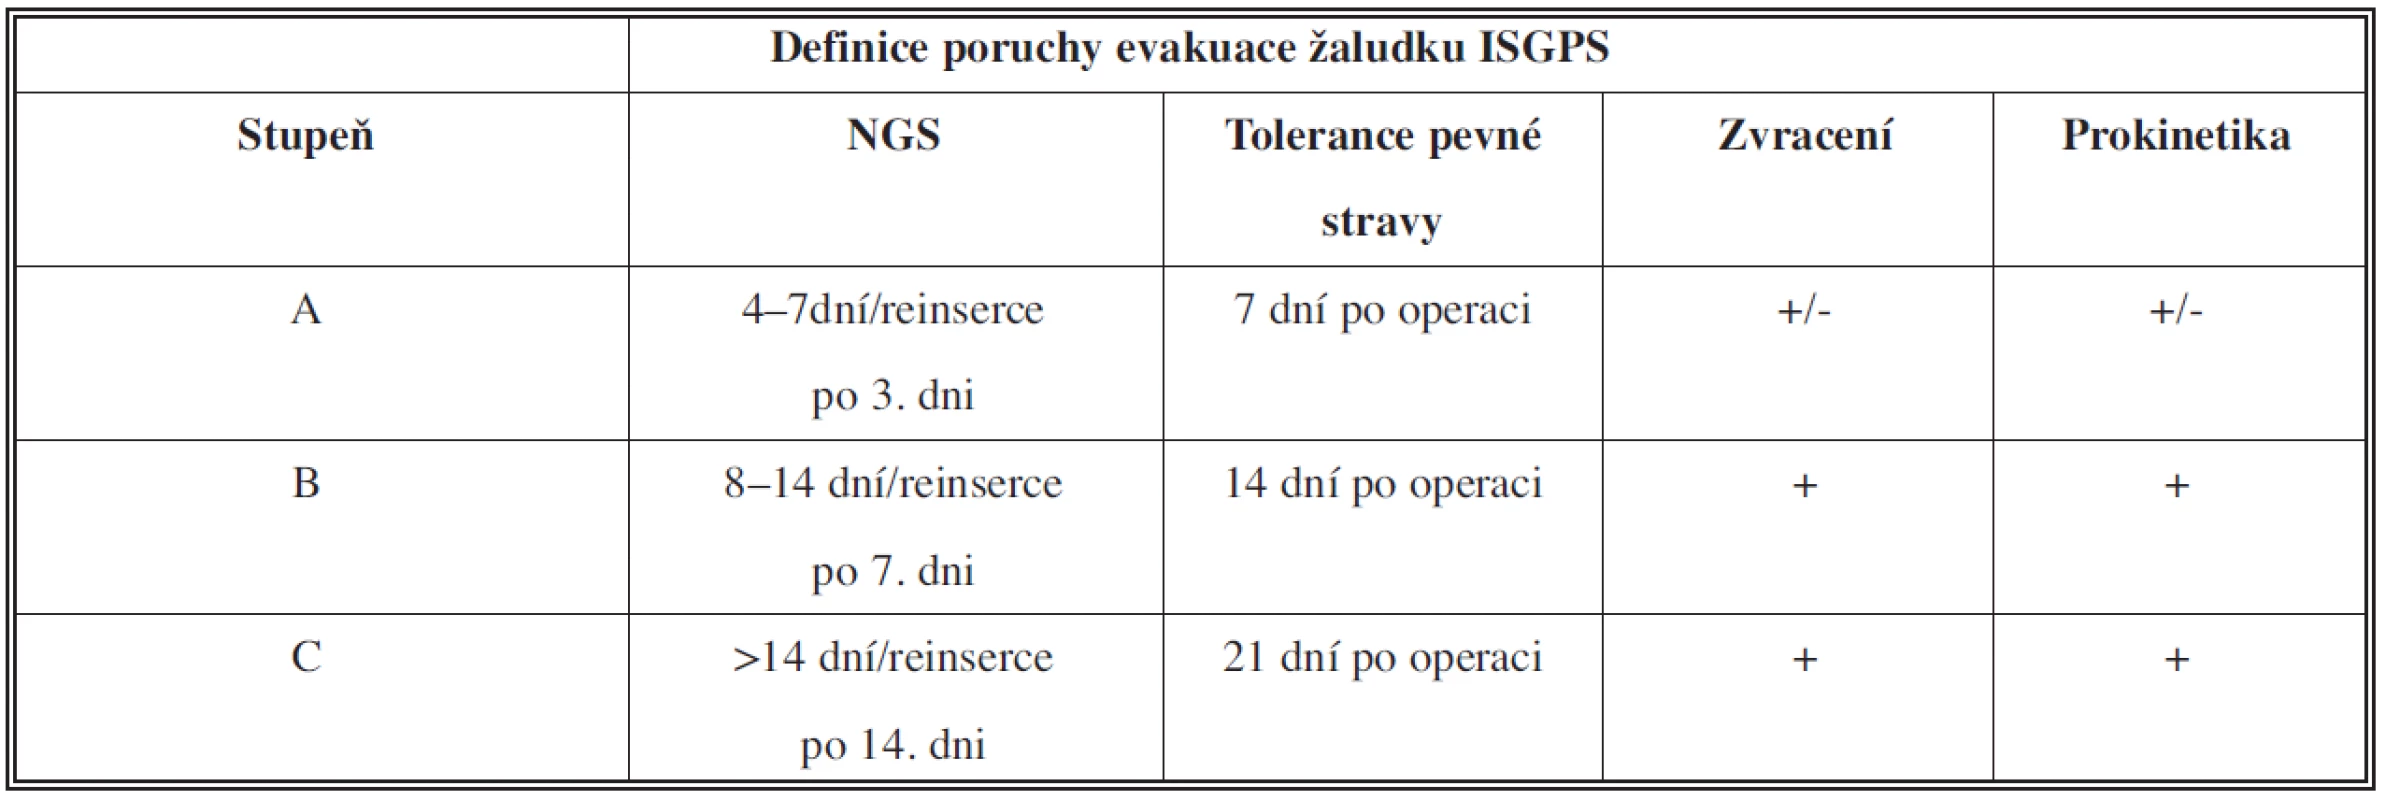 Definice poruchy evakuace žaludku ISGPS [5]
Tab. 1: ISGPS definition of delayed gastric emptying [5]